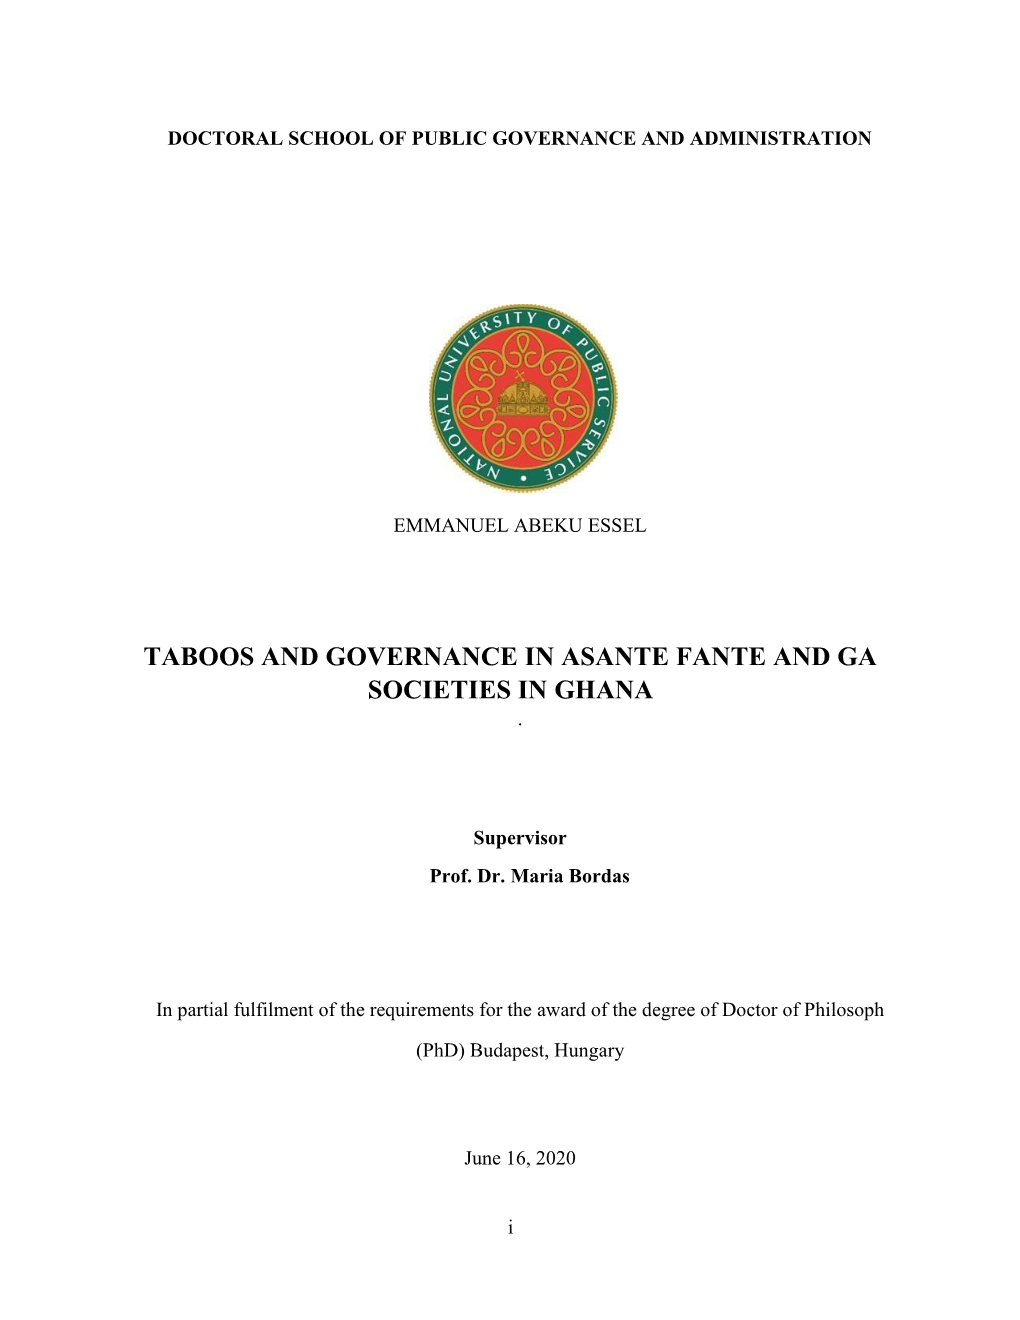 Taboos and Governance in Asante Fante and Ga Societies in Ghana